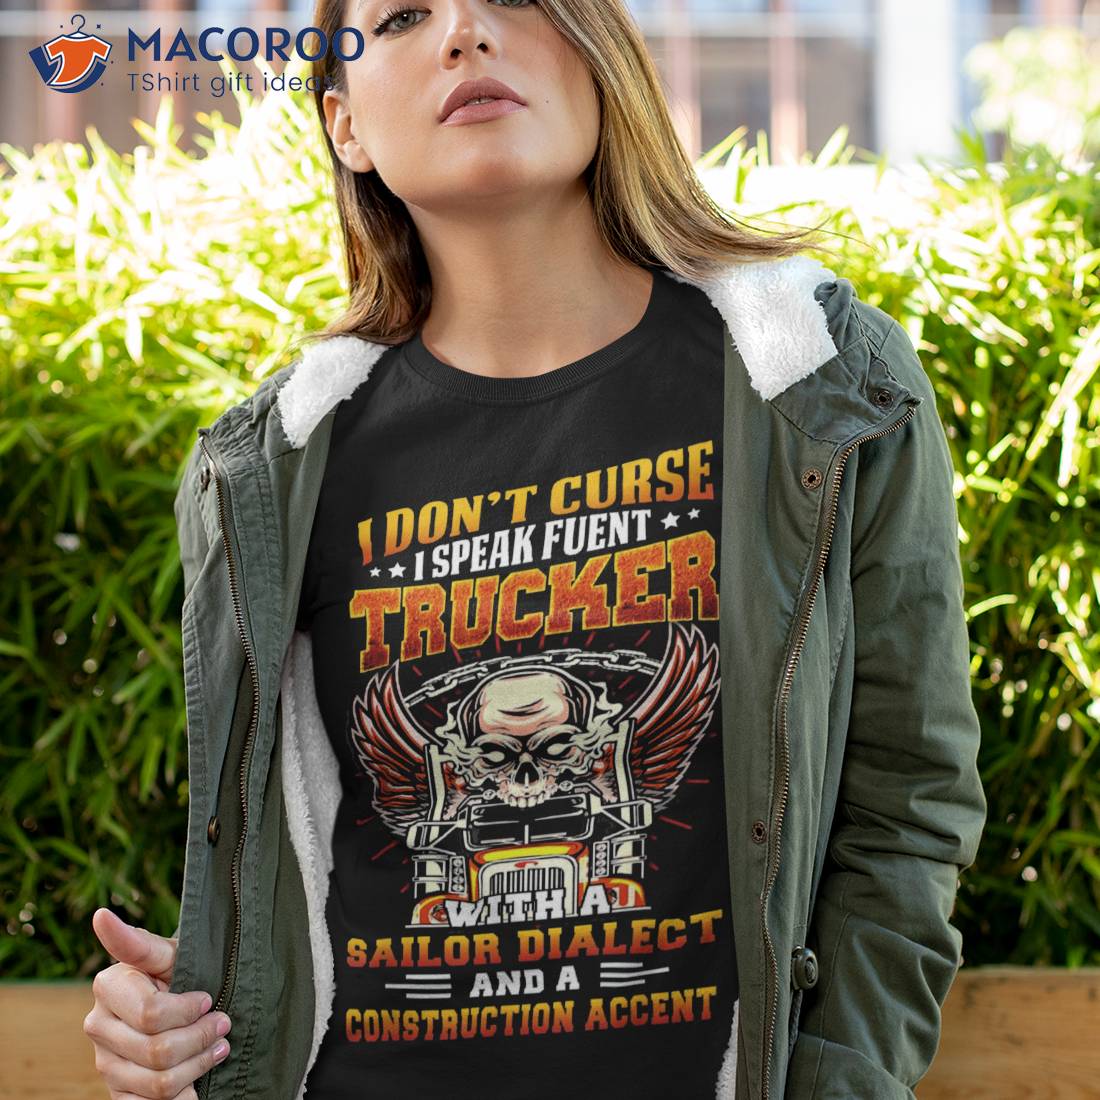 https://images.macoroo.com/wp-content/uploads/2023/04/i-don-t-cruise-speak-fuent-trucker-truck-drivers-gifts-shirt-tshirt-4.jpg